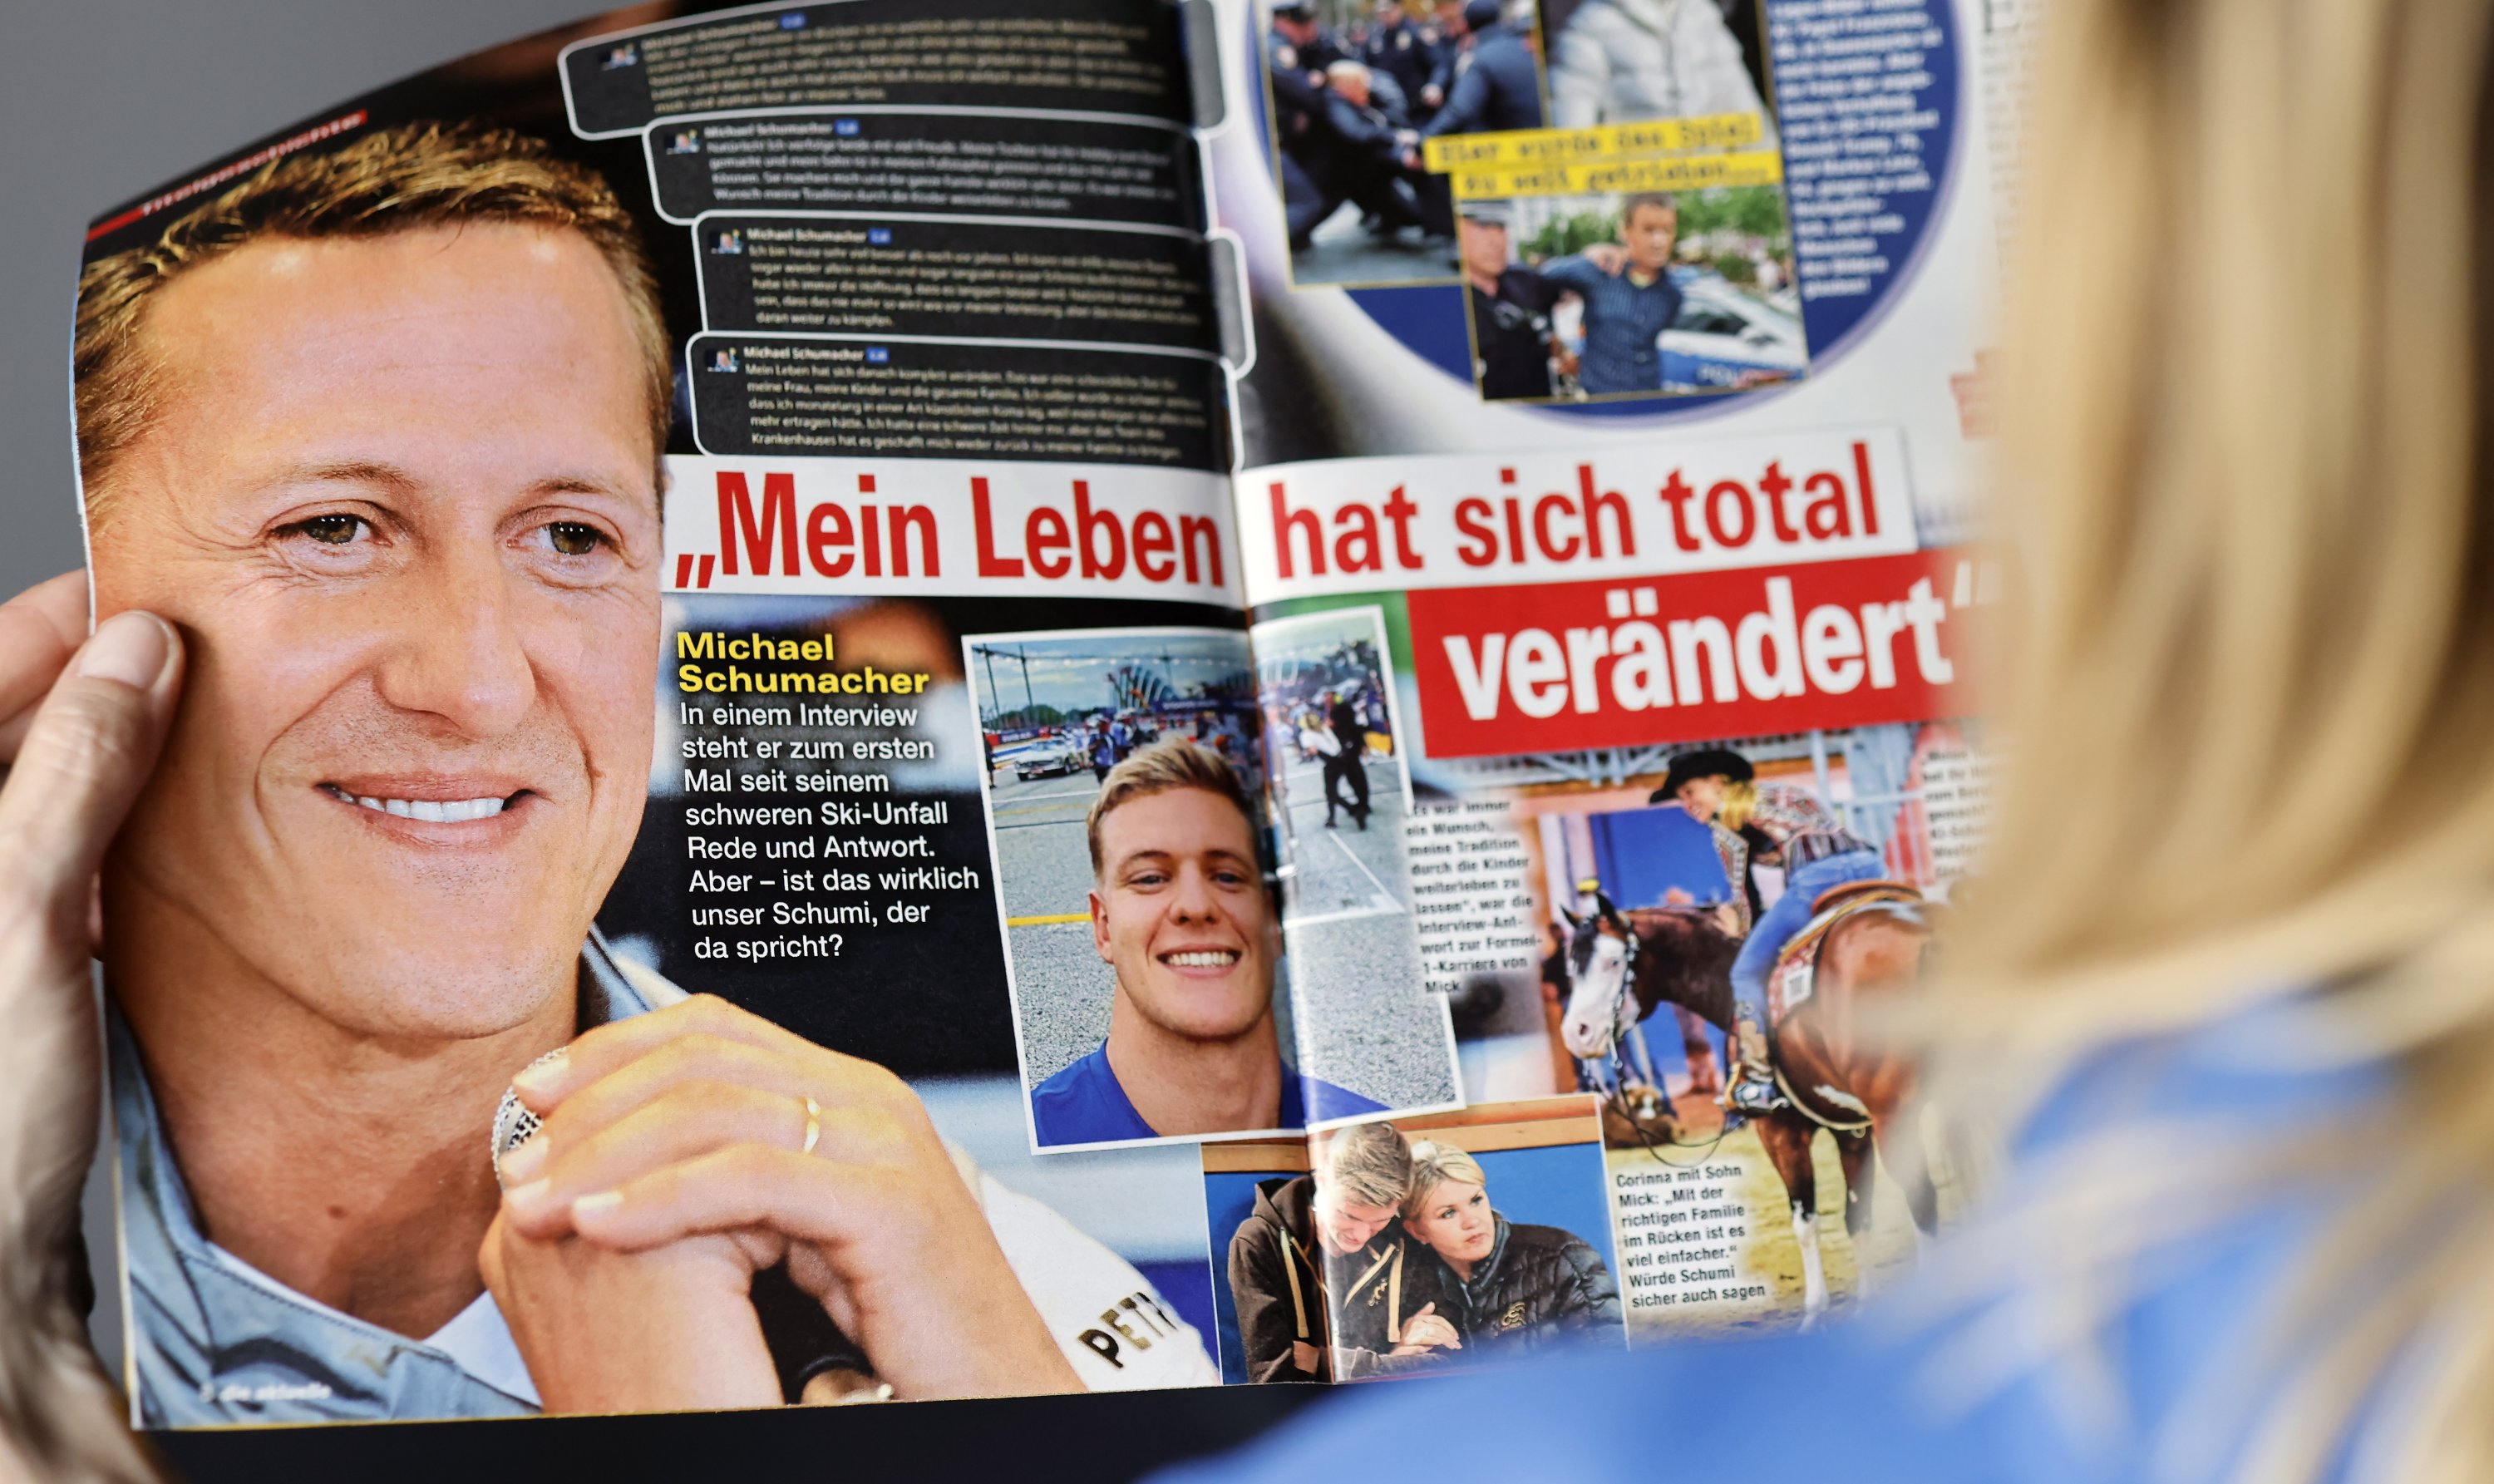 German publisher regrets AI-generated Schumacher interview